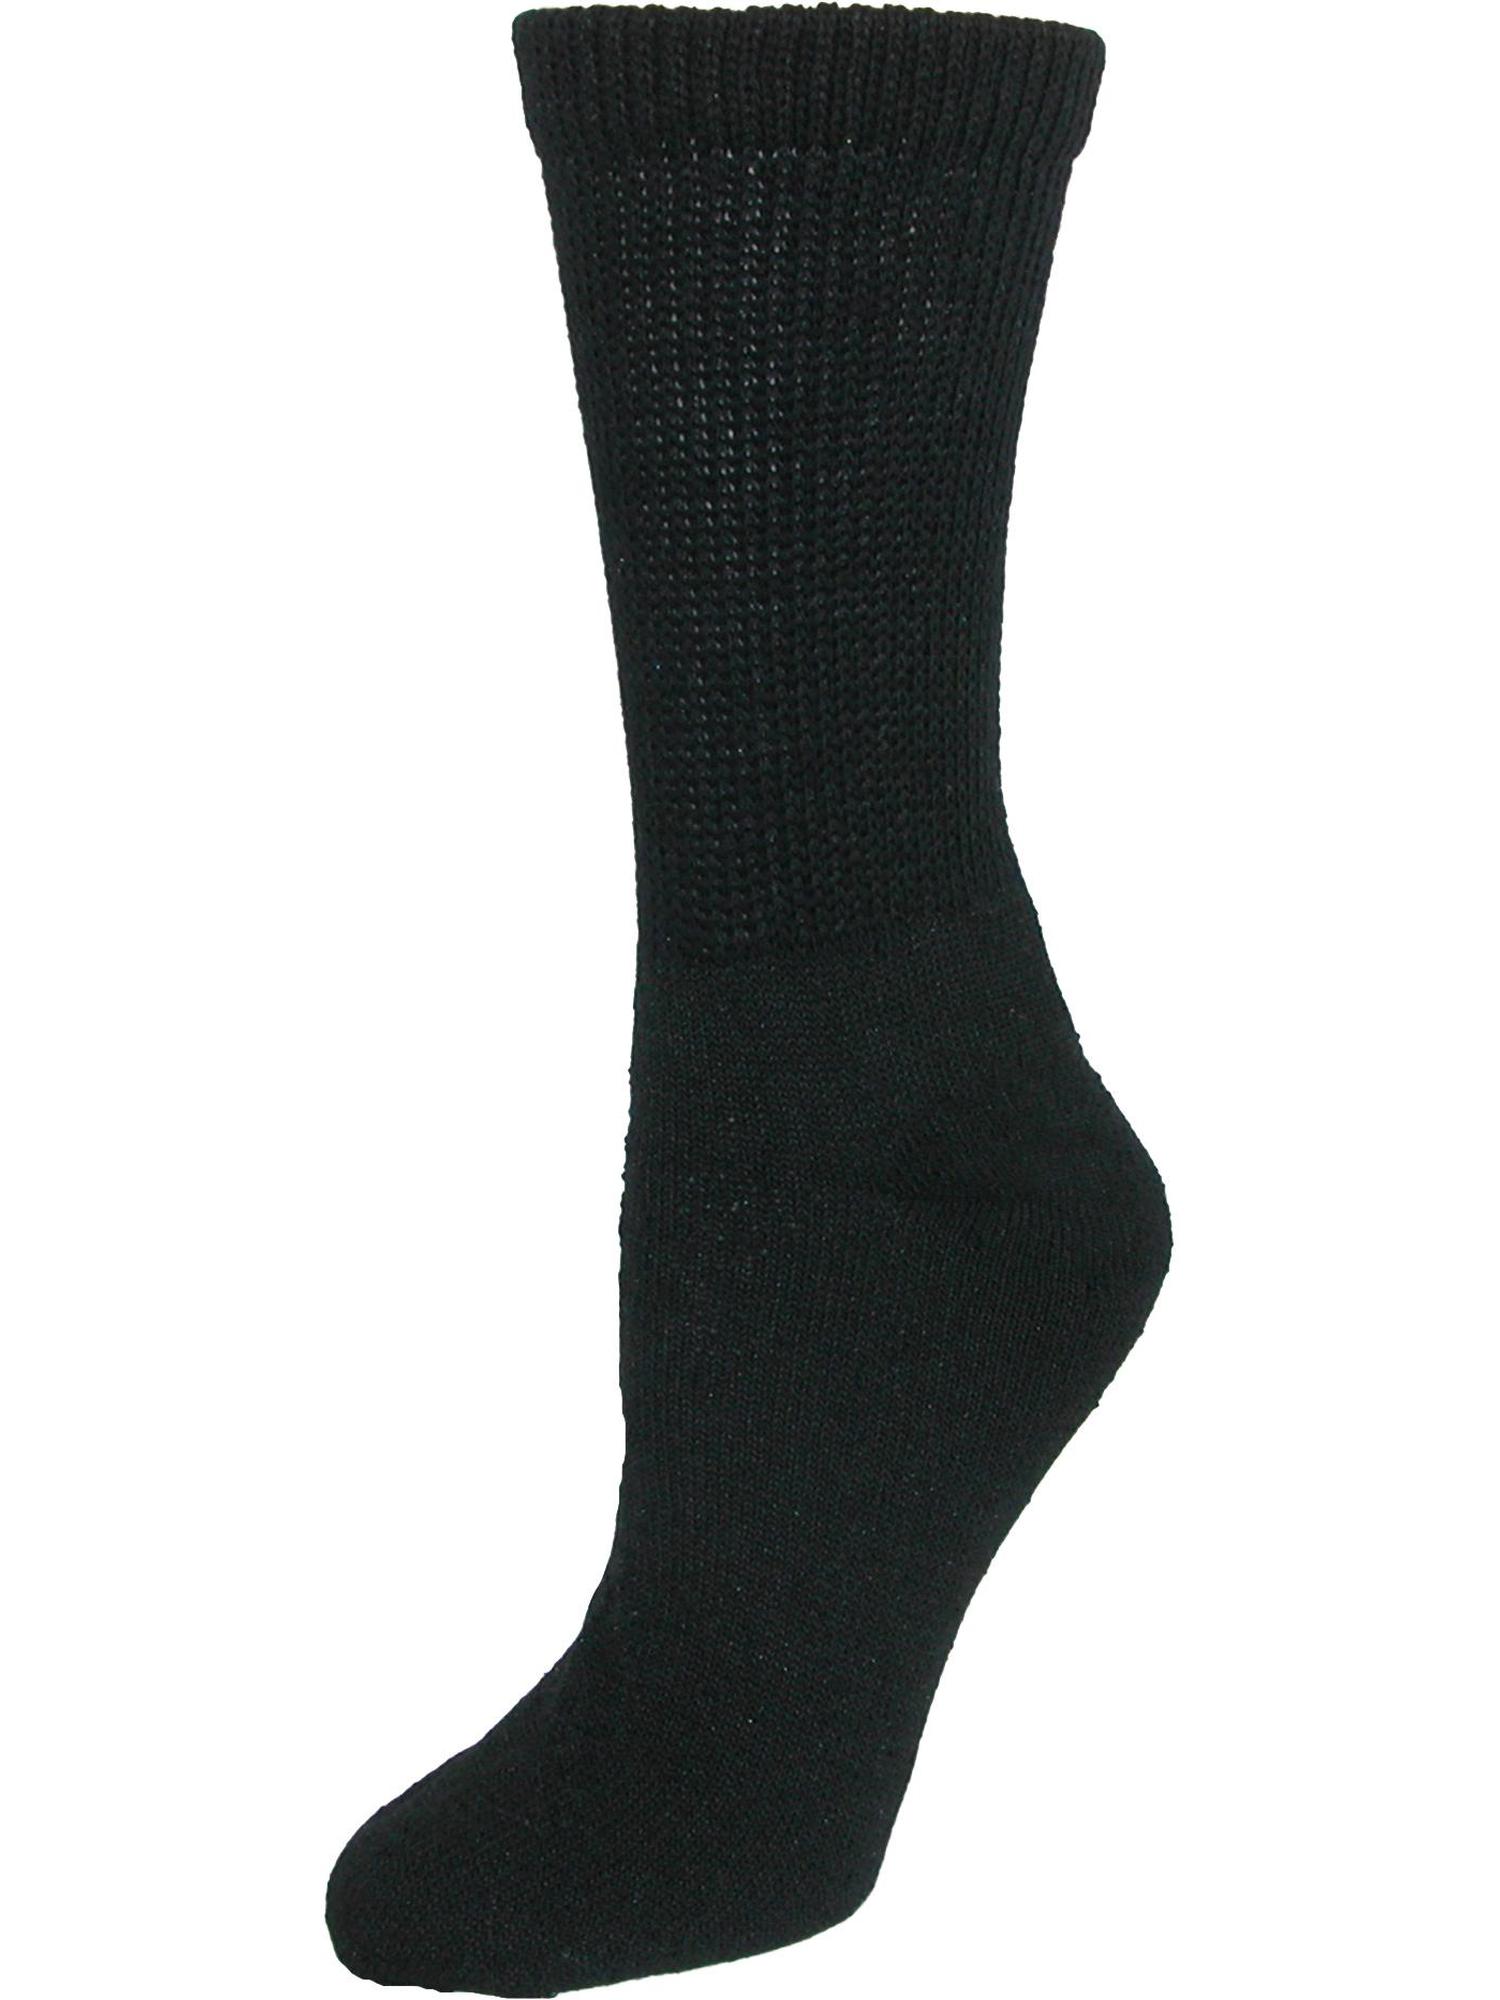 CTM - CTM® Diabetic Crew Socks (3 Pair Pack) (Women's) - Walmart.com ...